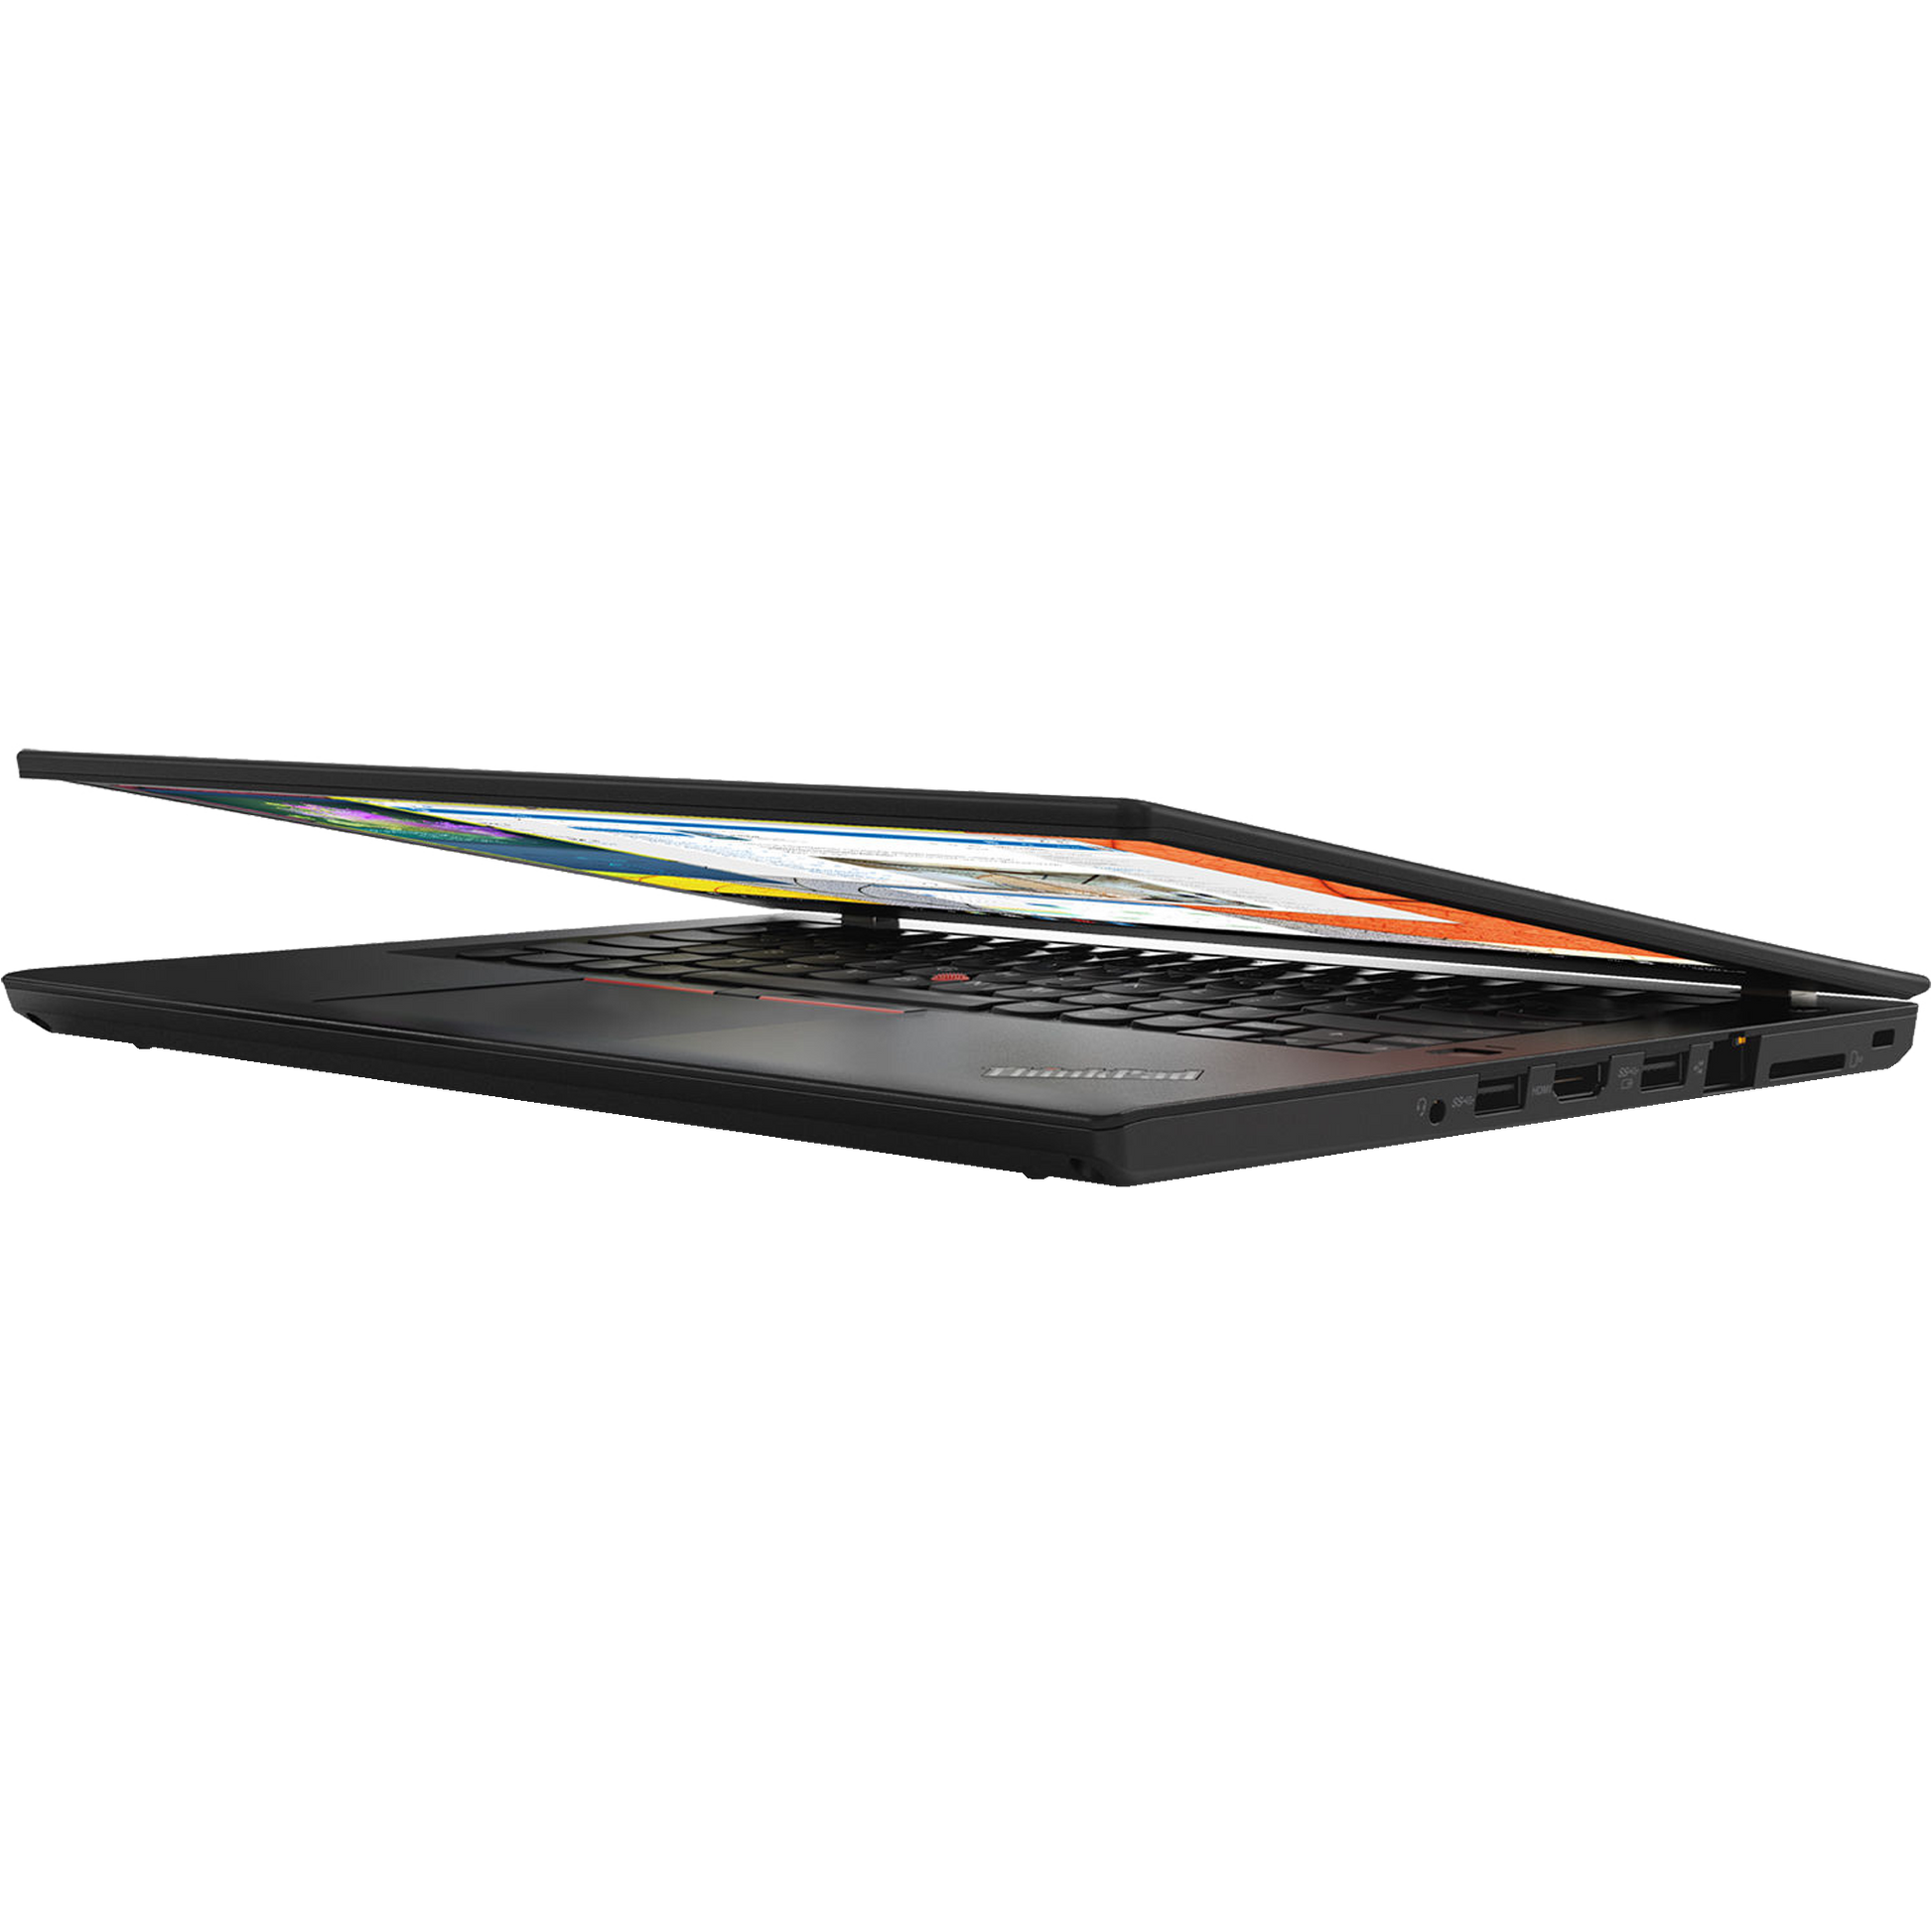 Lenovo ThinkPad T480 Intel i5, 8th Gen 16GB Laptop with Win 11 Pro Laptops - Refurbished